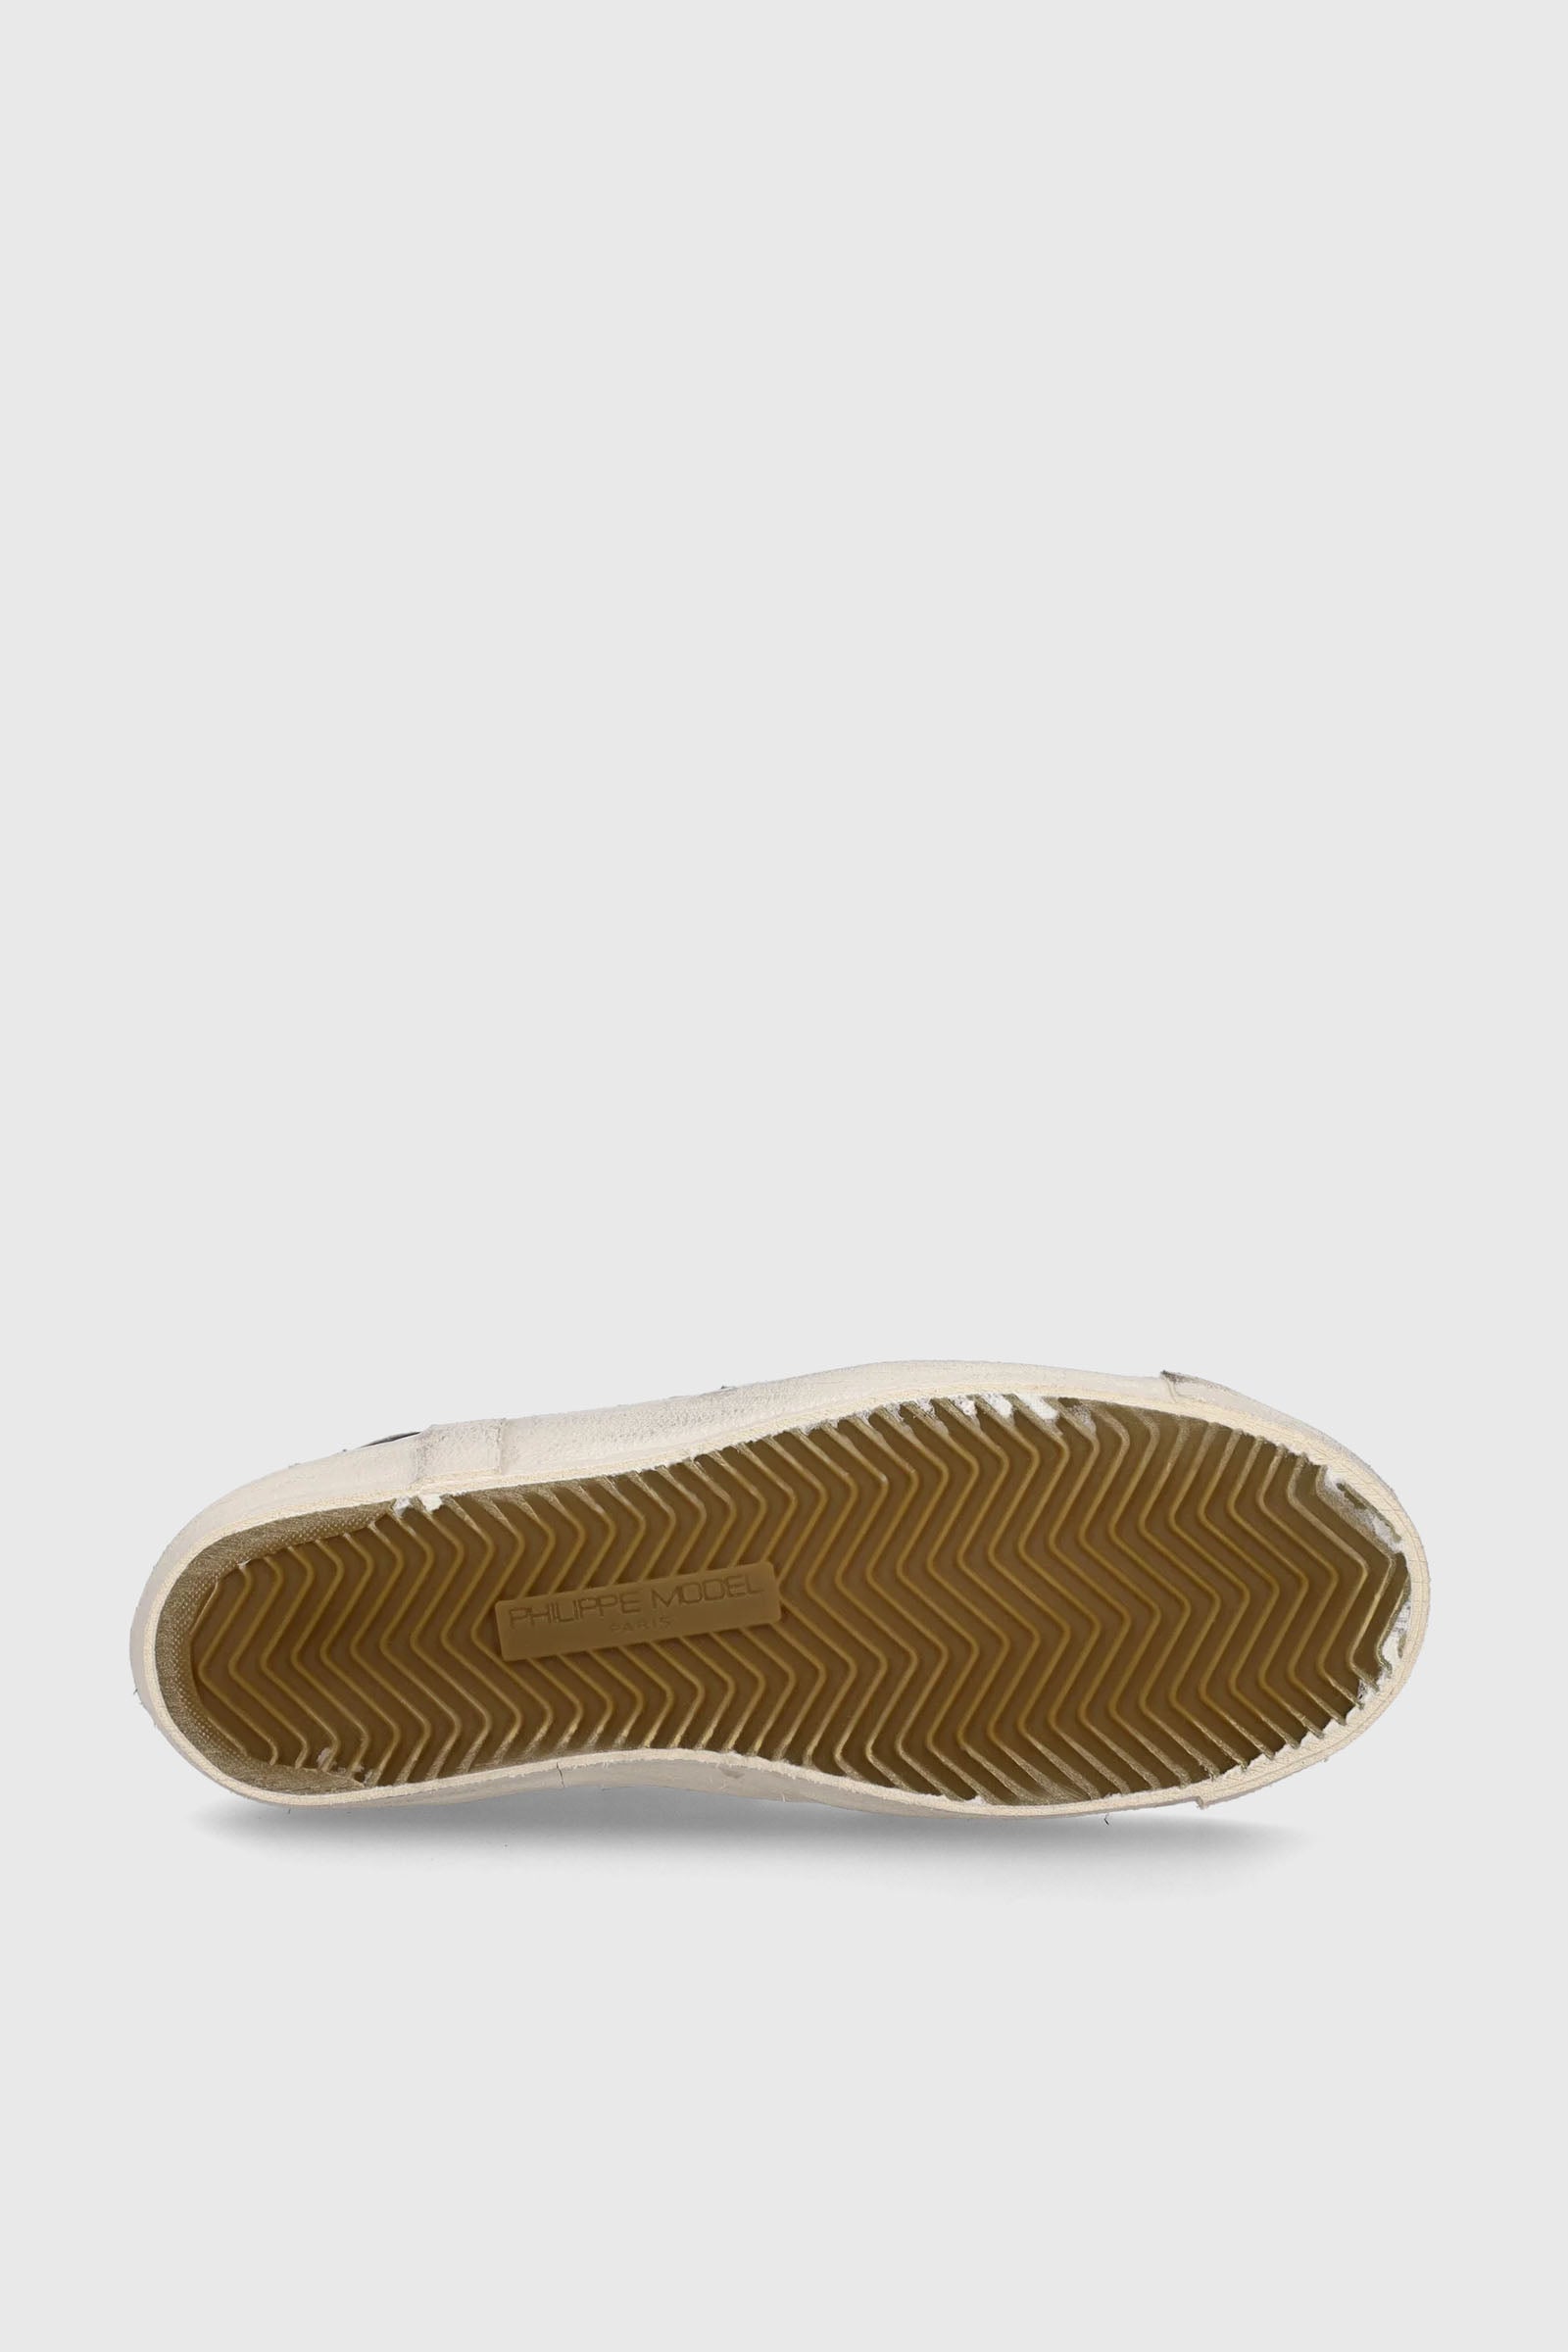 Philippe Model Sneaker PRSX Pelle Bianco/Giallo Fluo - 6